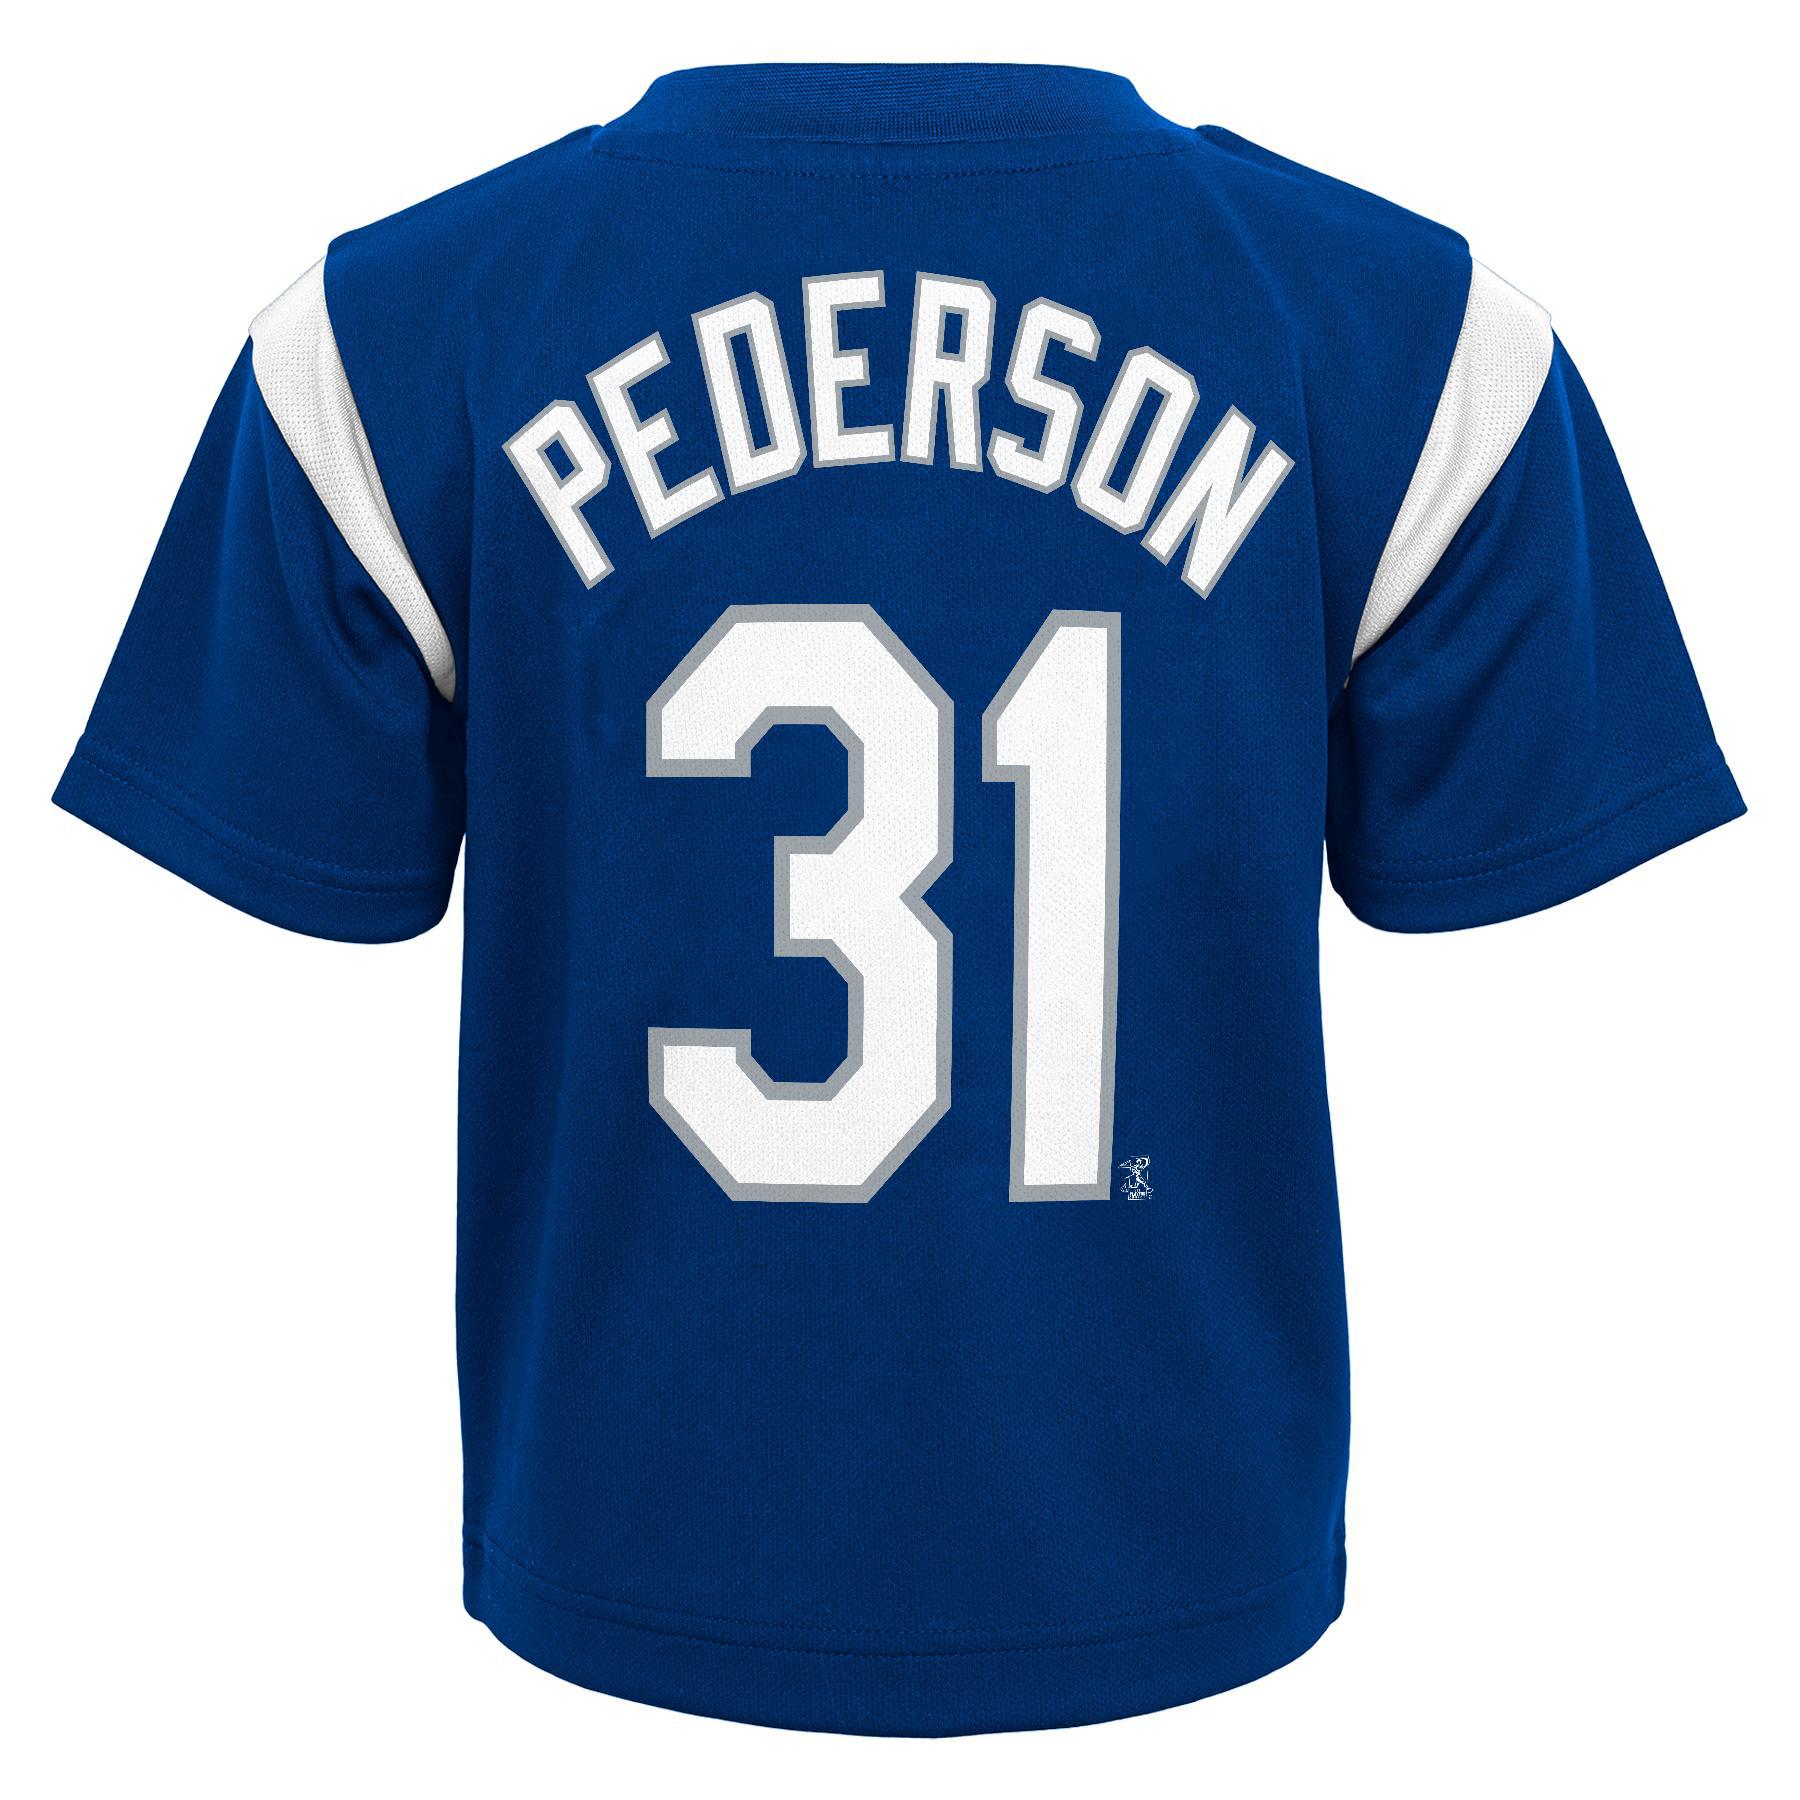 MLB Joc Pederson Boys' Graphic T-Shirt - Los Angeles Dodgers1800 x 1800